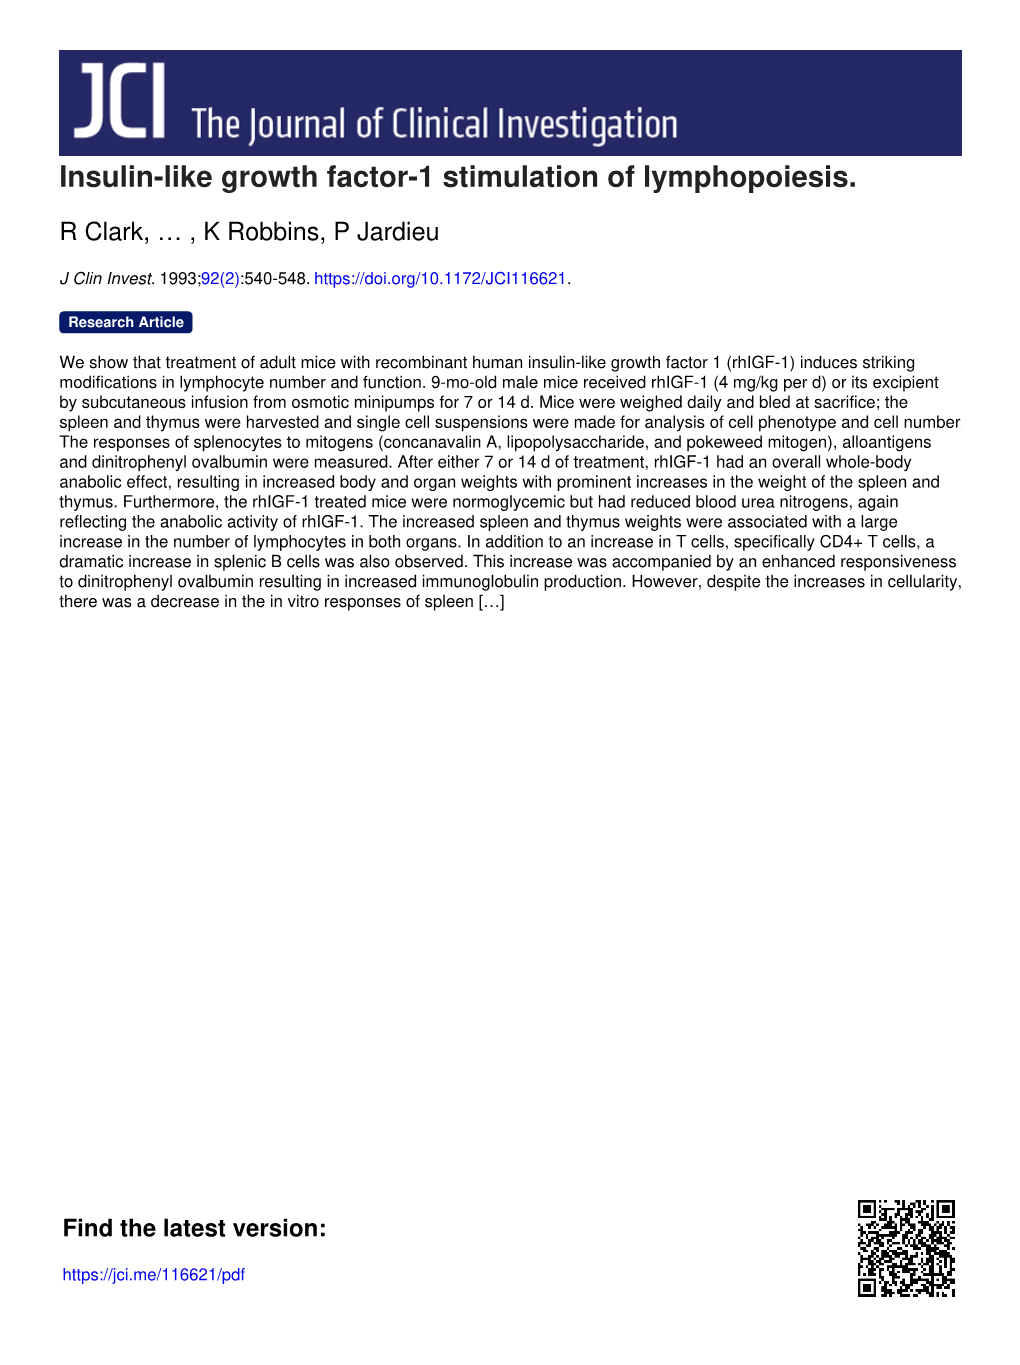 Insulin-Like Growth Factor-1 Stimulation of Lymphopoiesis